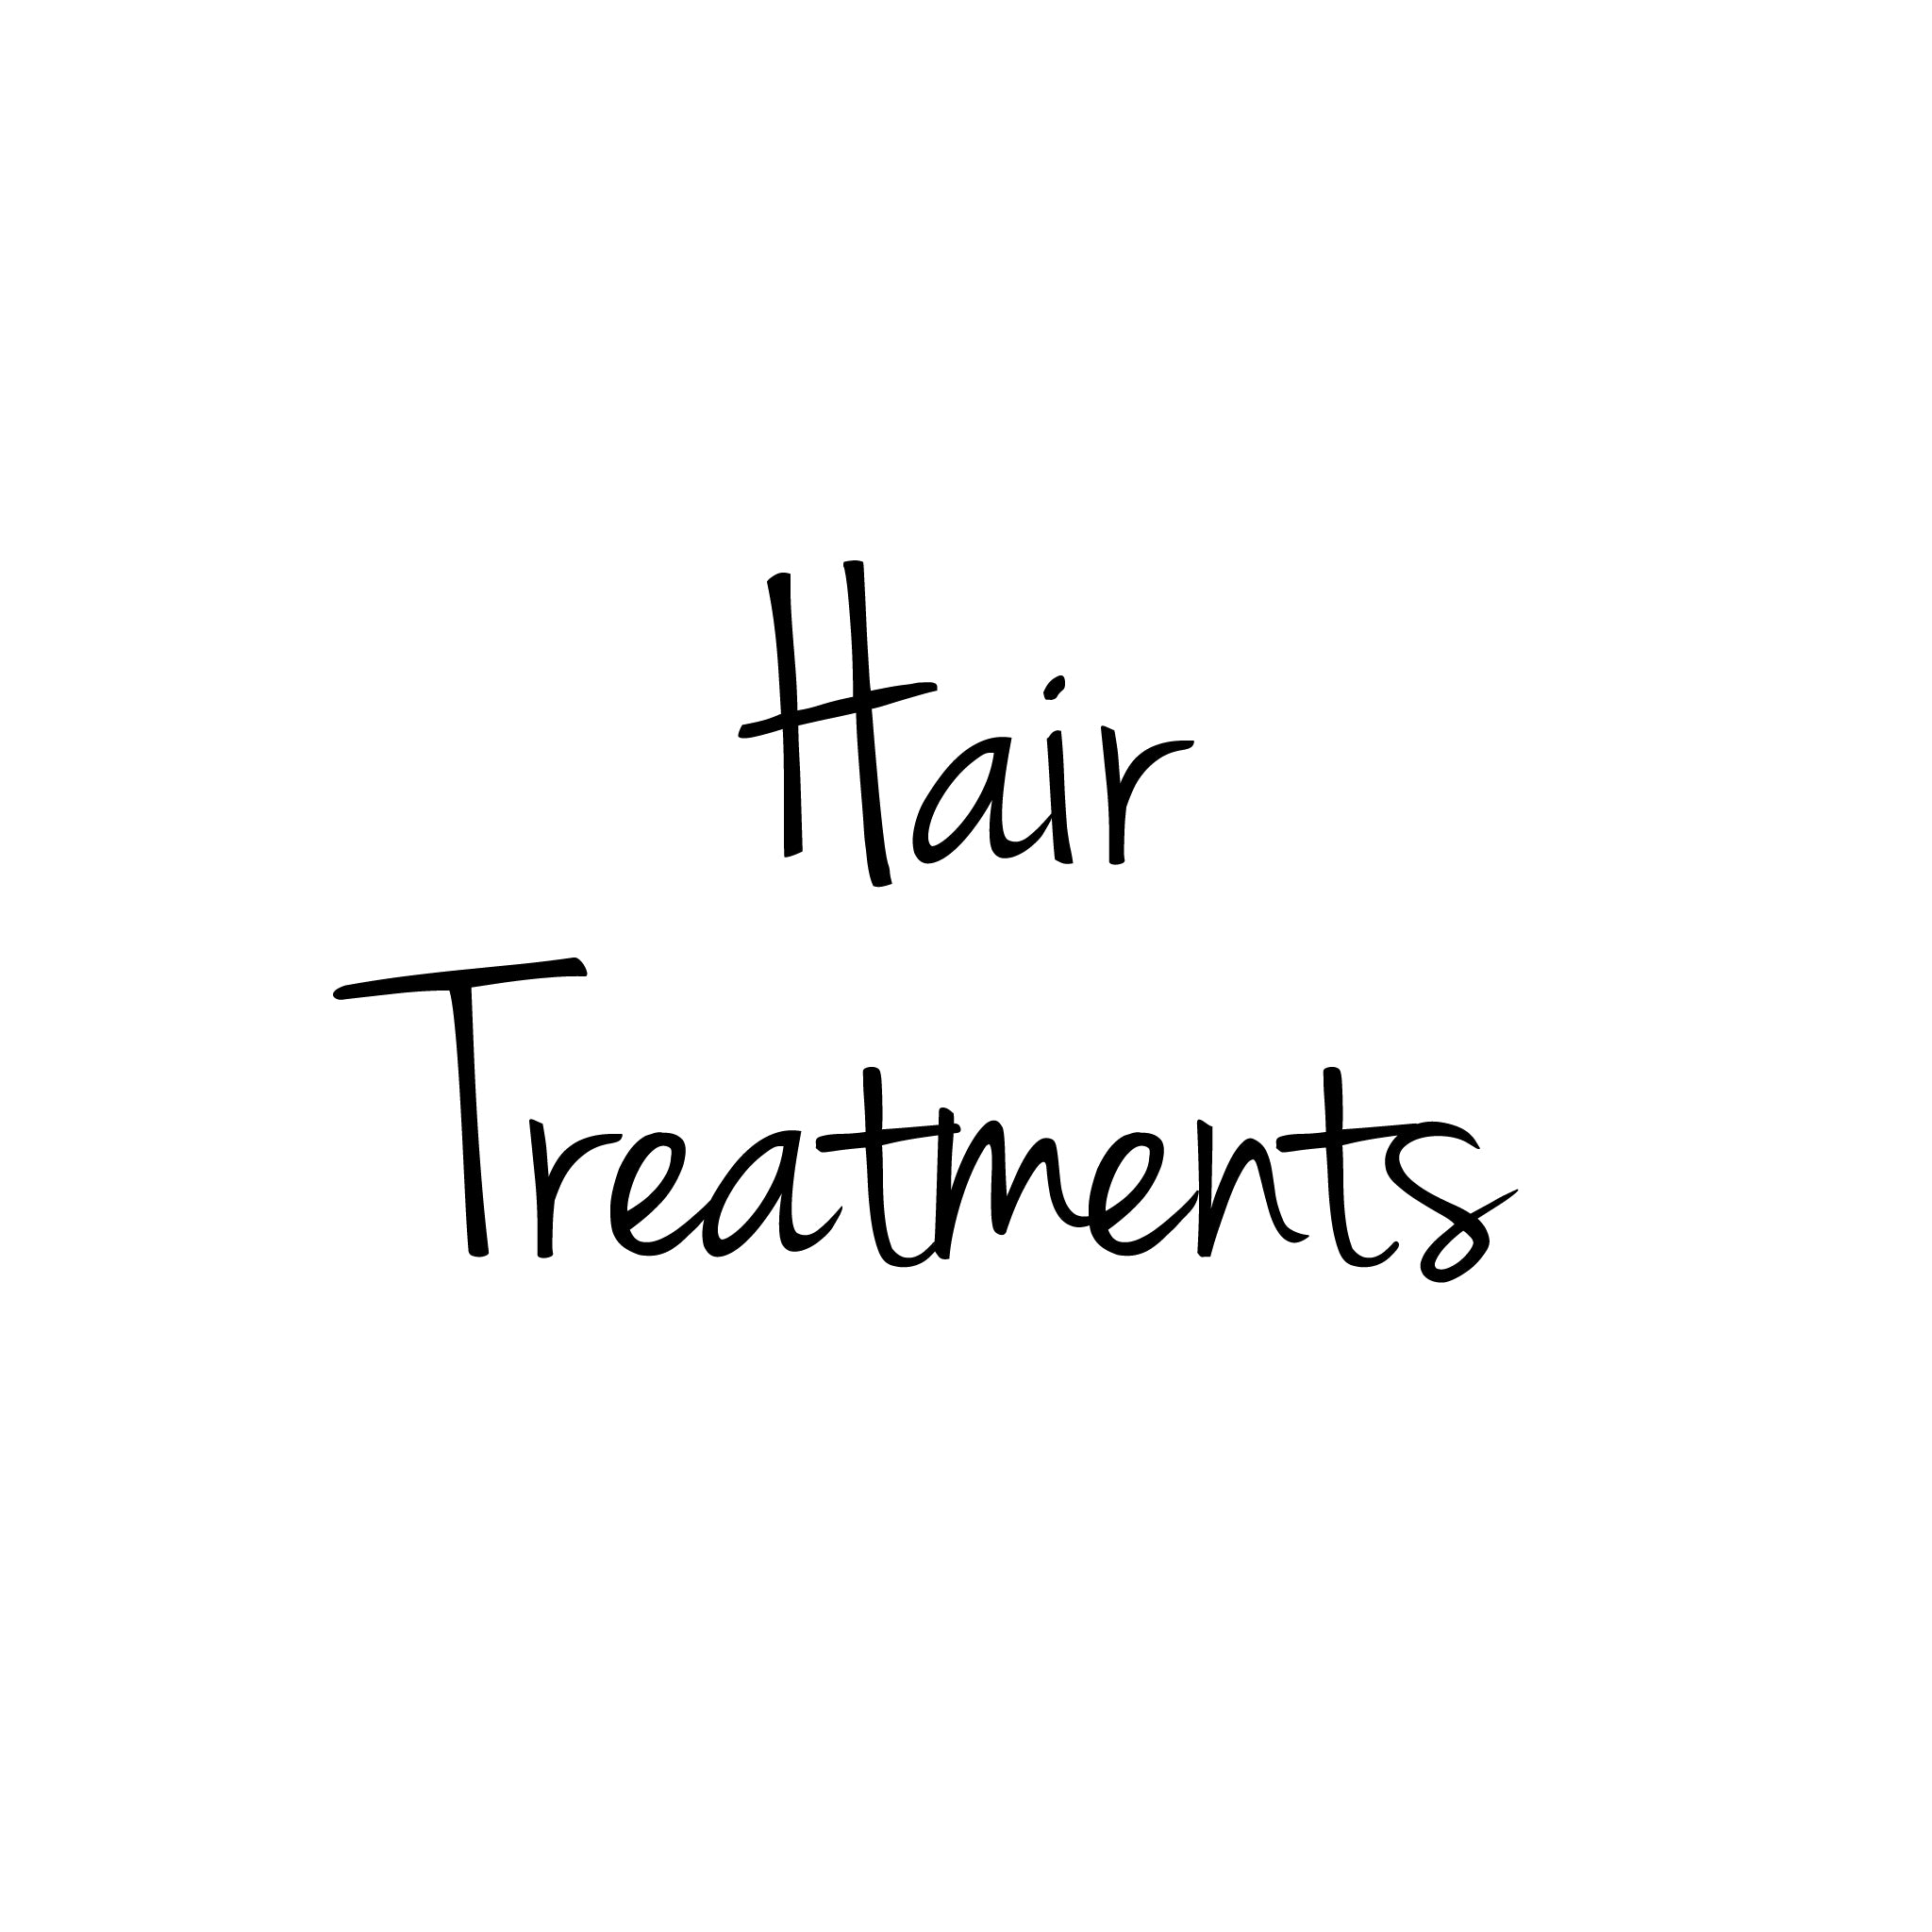 HAIR TREATMENTS